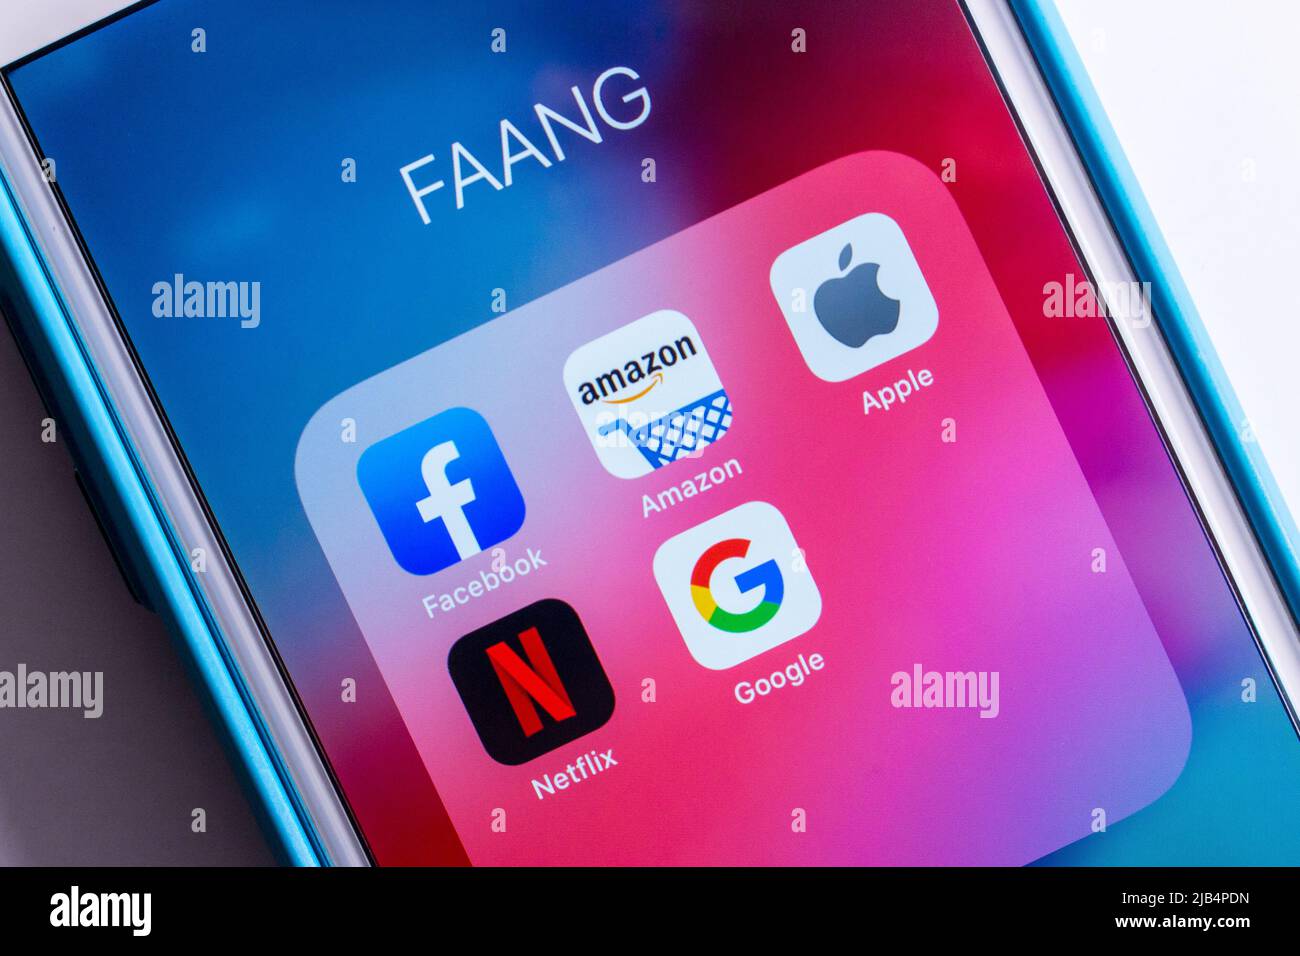 Kumamoto, Japan - Apr 23 2020 : Image of FAANG Big Tech icons (Facebook, Amazon, Apple, Netflix & Google) on iPhone. FAANG is an acronym /a buzzword. Stock Photo